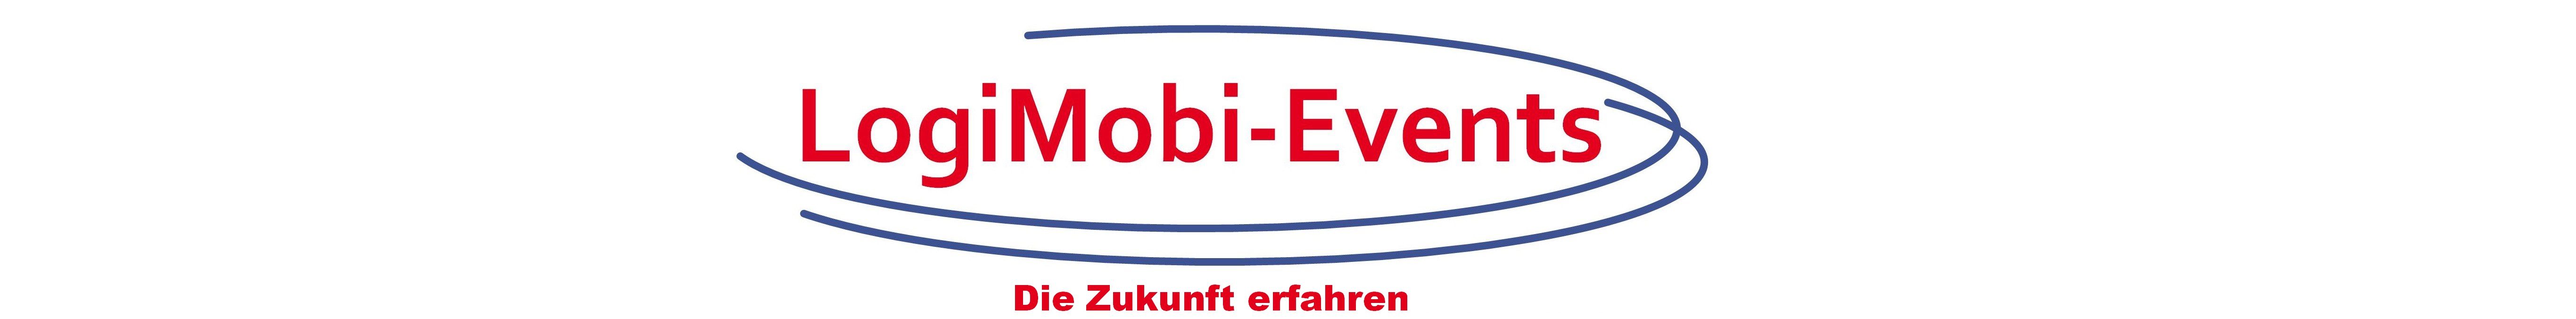 LogiMobi Events